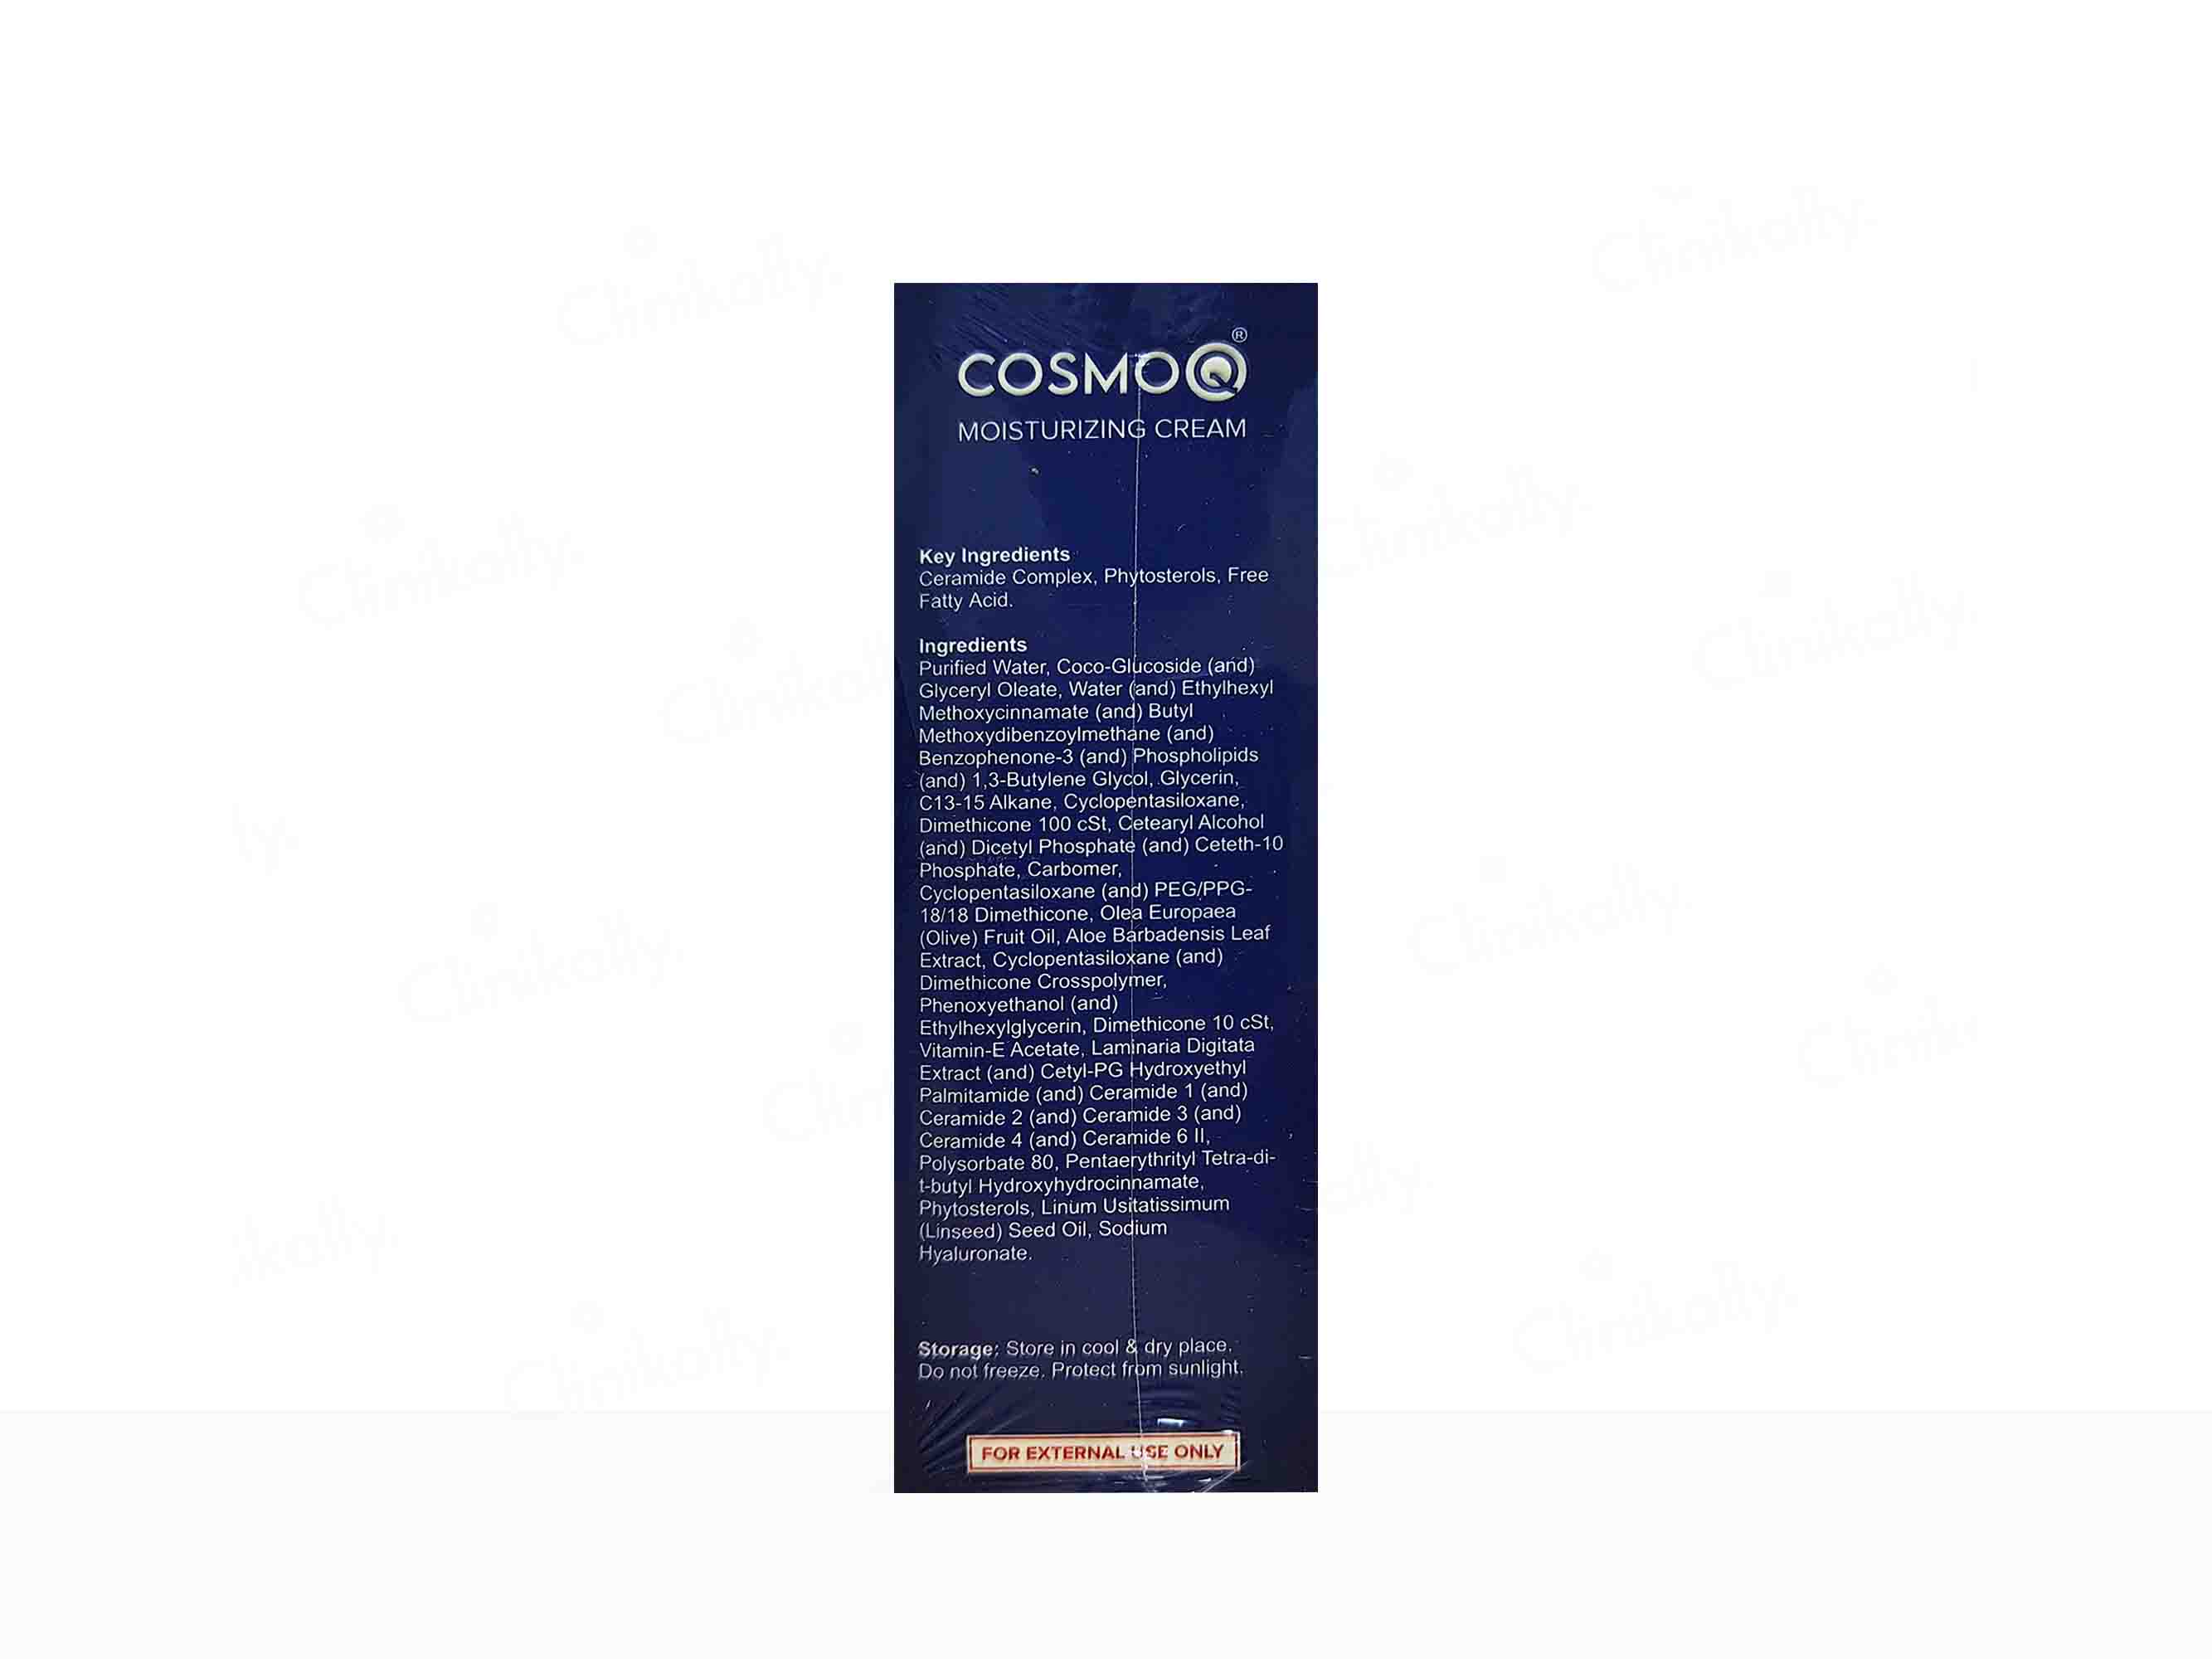 CosmoQ Moisturizing Cream